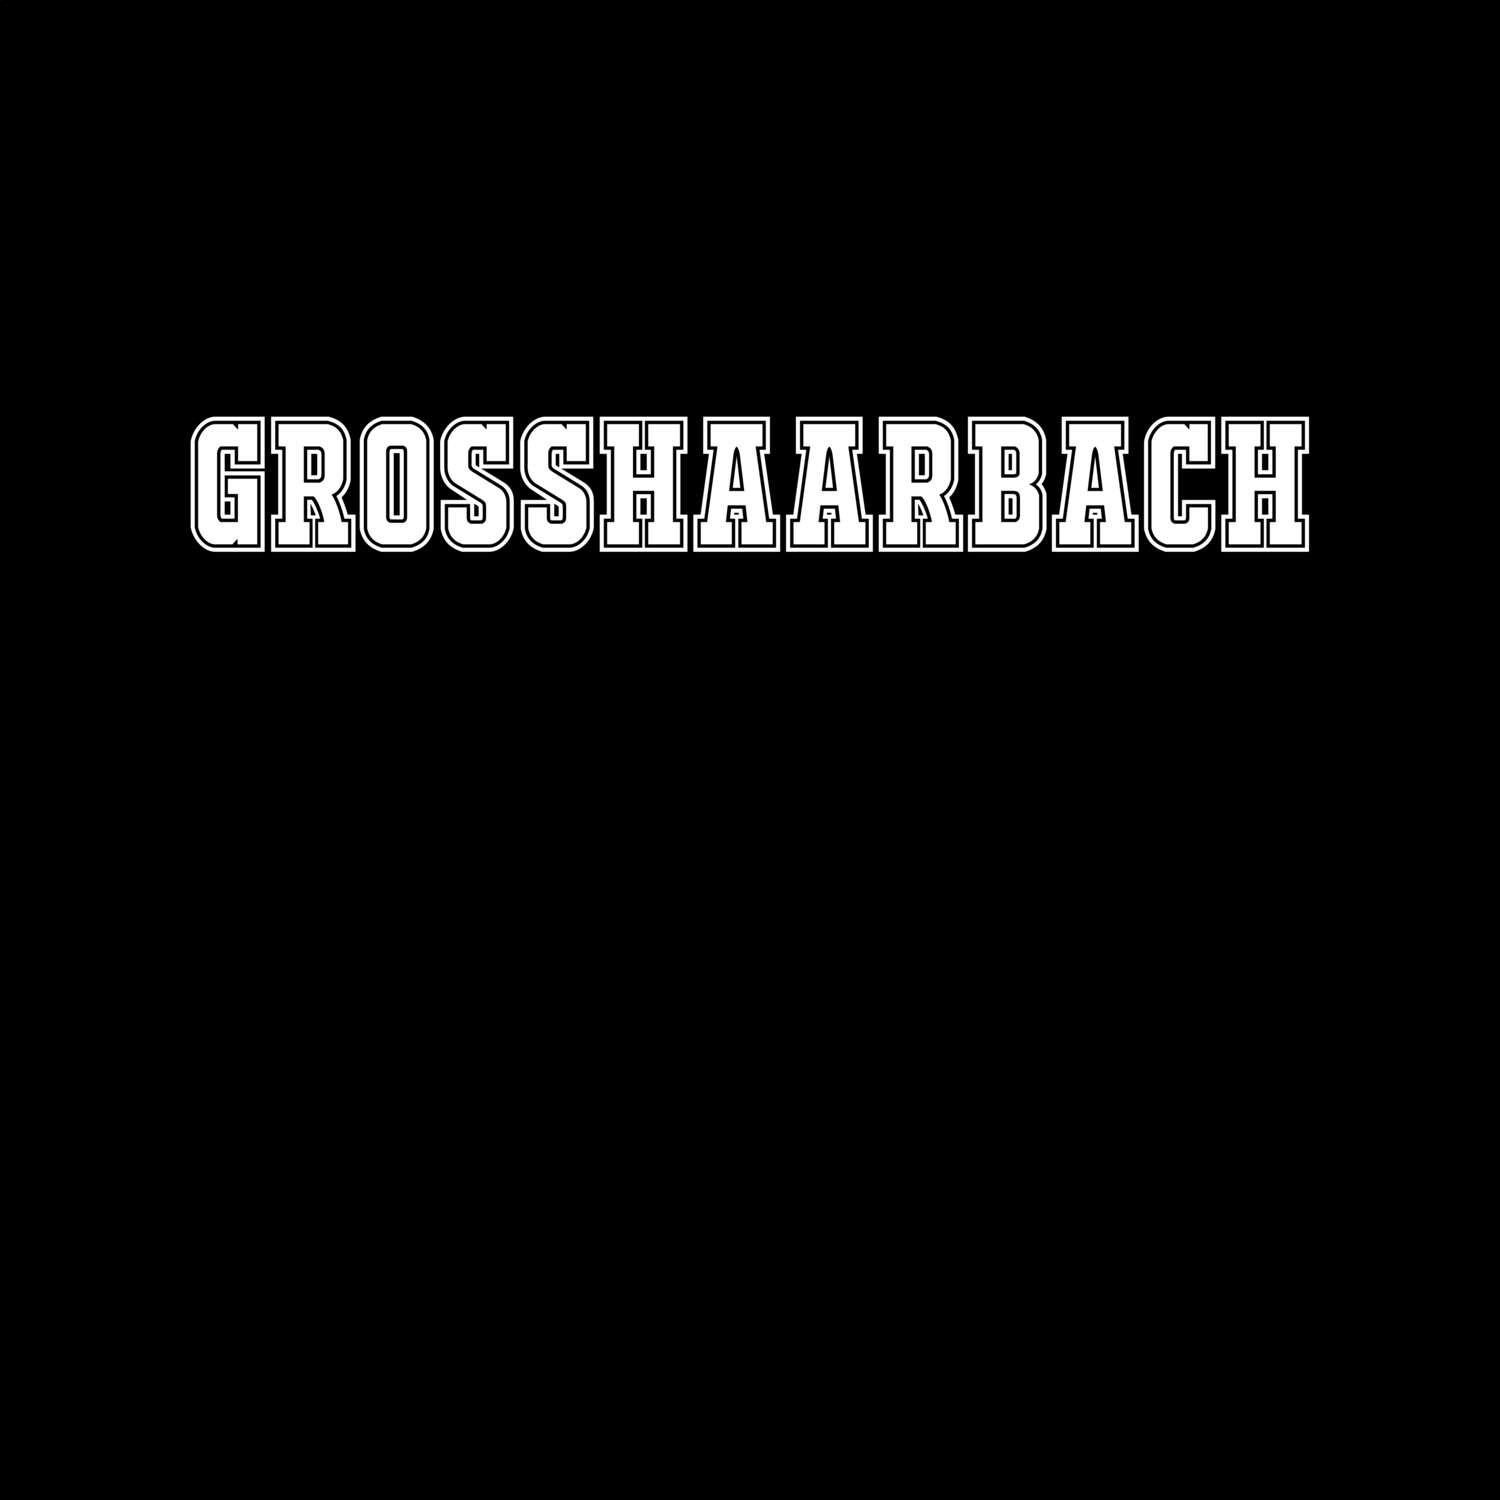 Großhaarbach T-Shirt »Classic«